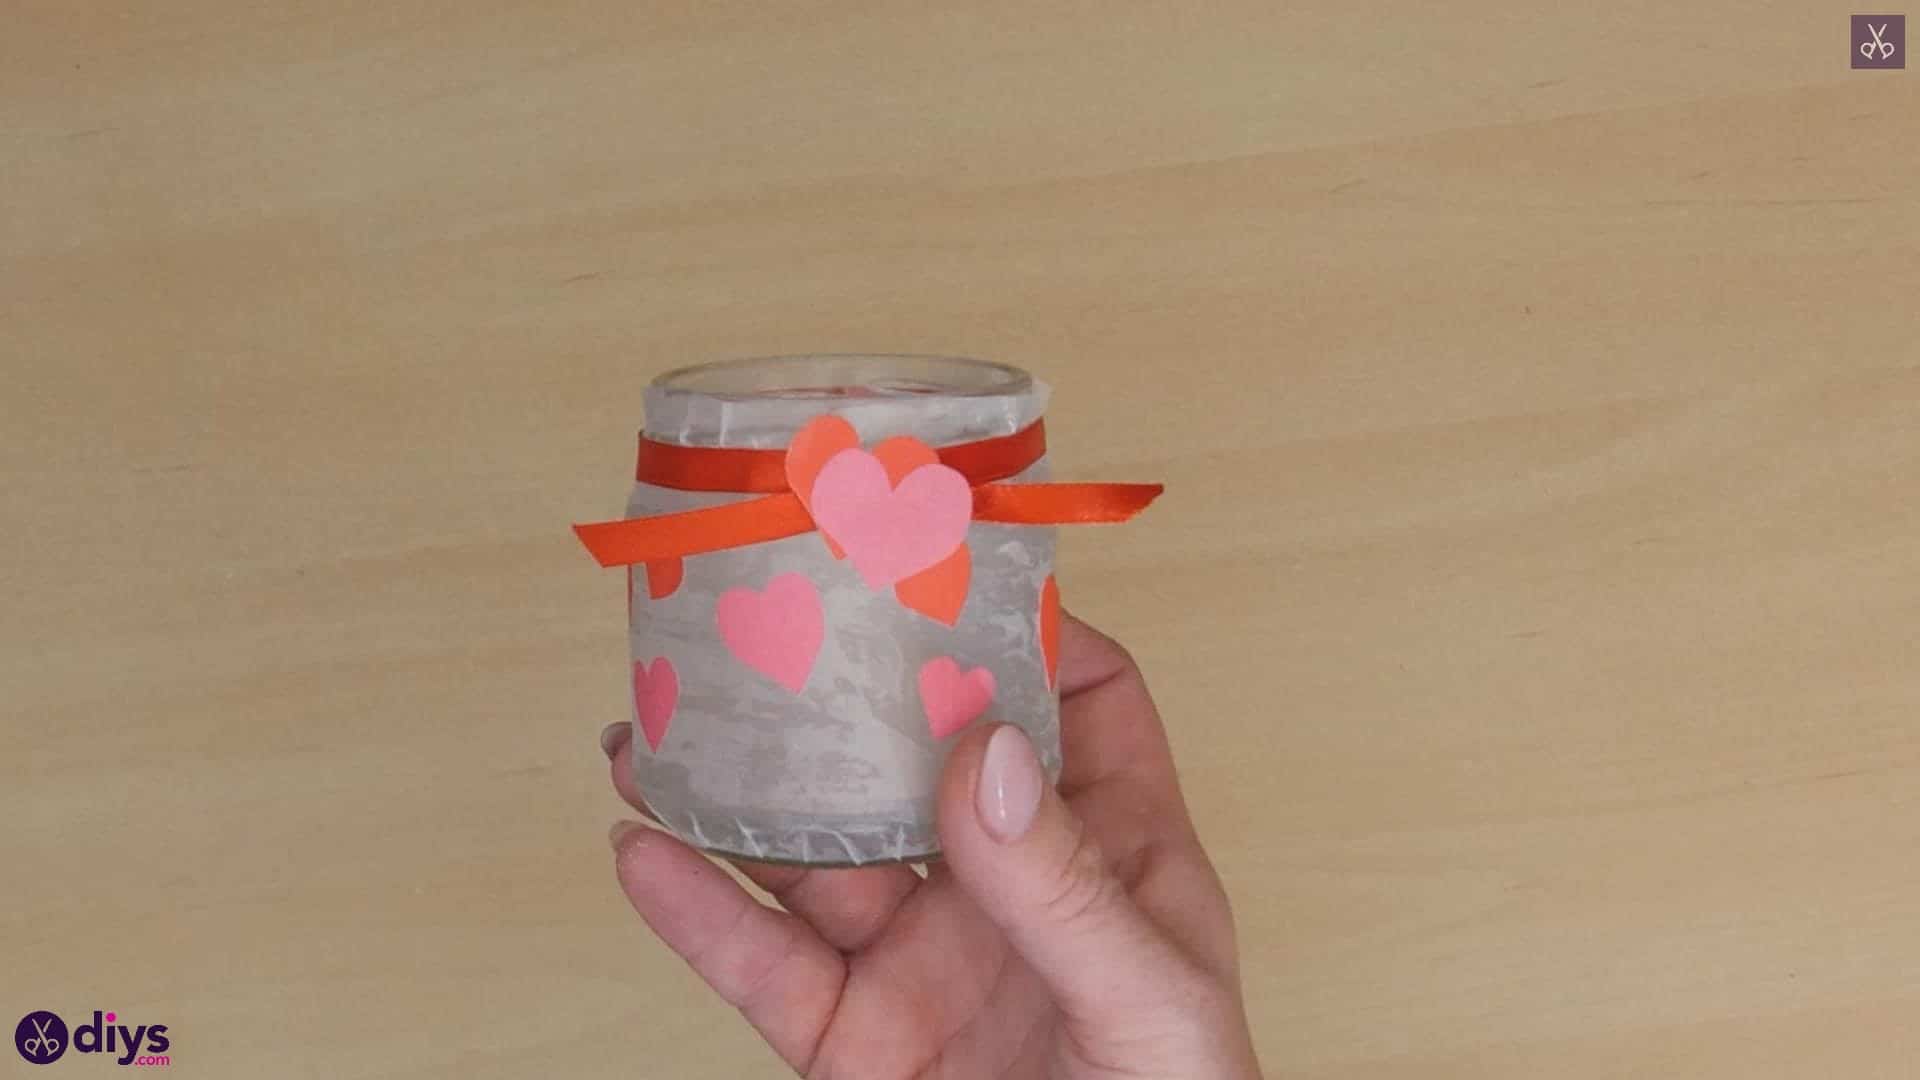 DIY Valentine Candles 🕯 I had extra wax in my craft bin, so when